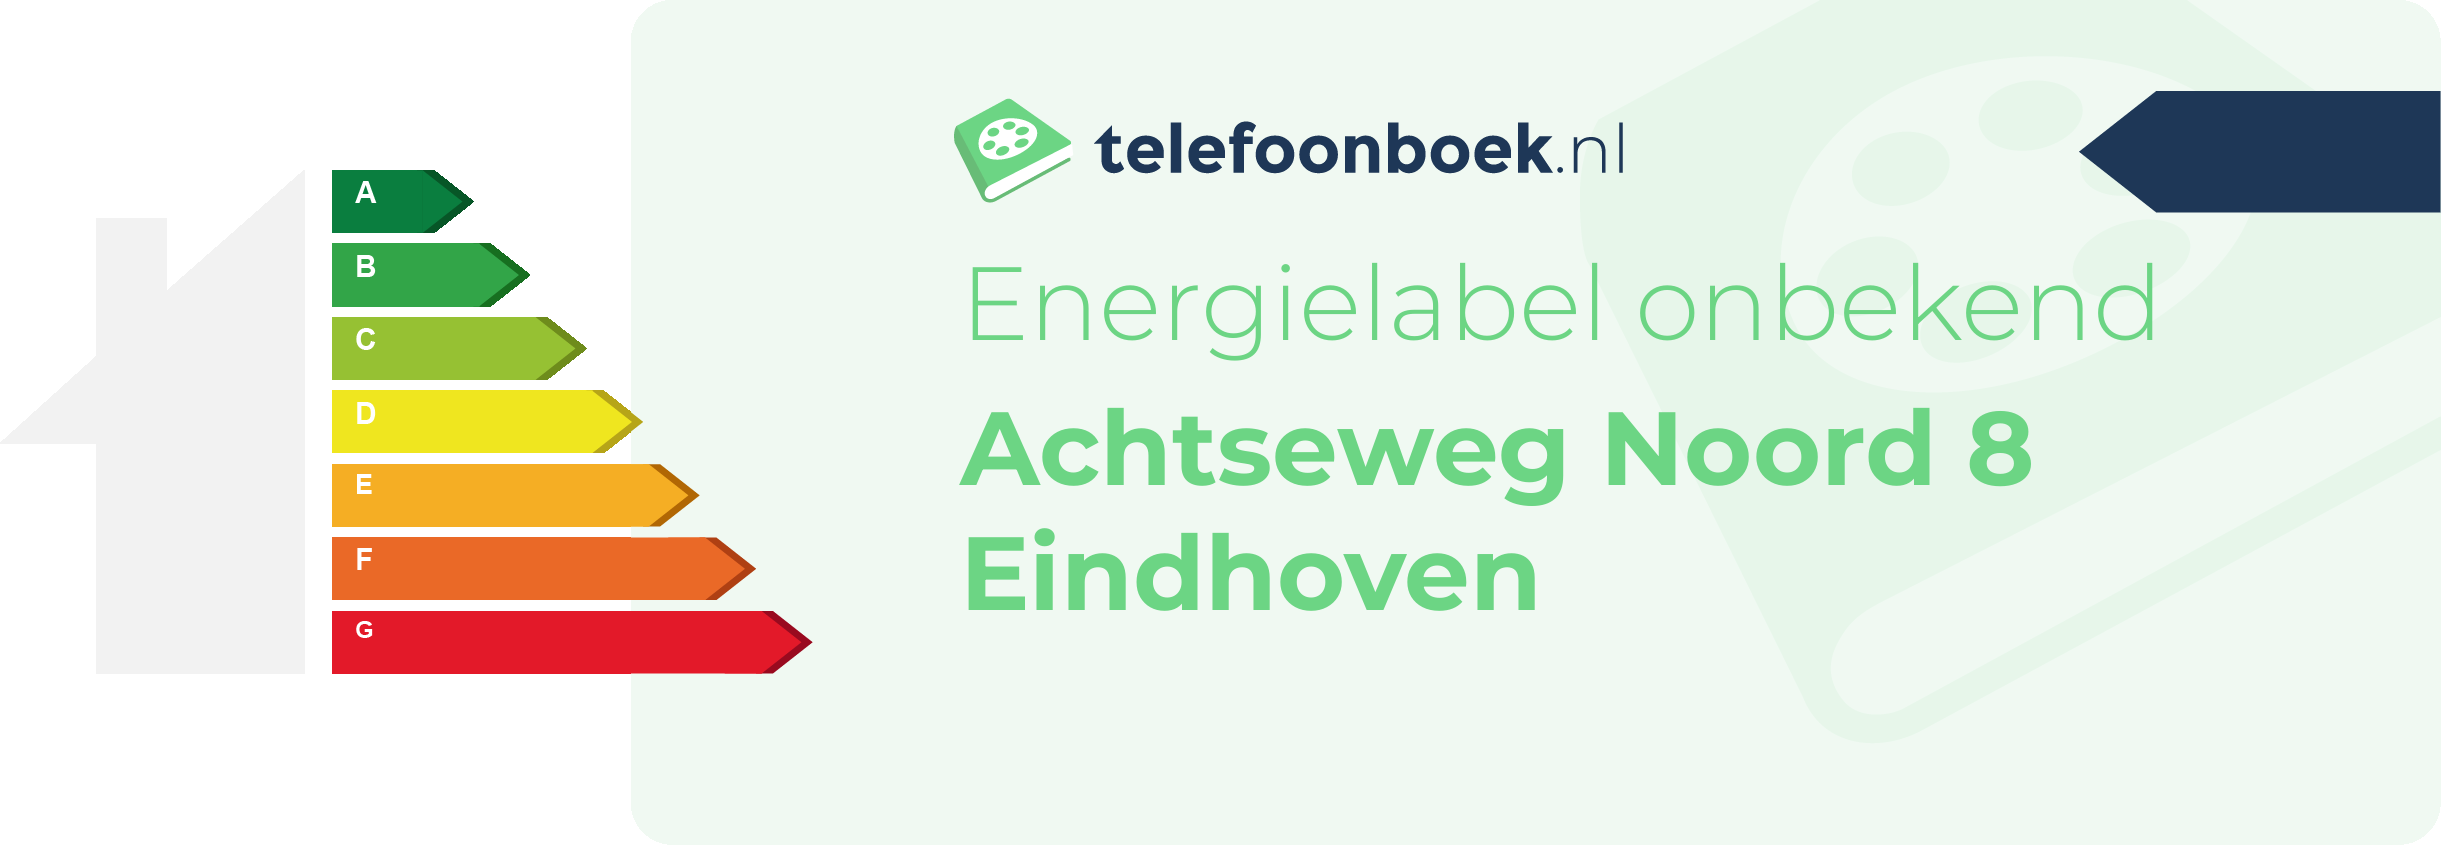 Energielabel Achtseweg Noord 8 Eindhoven